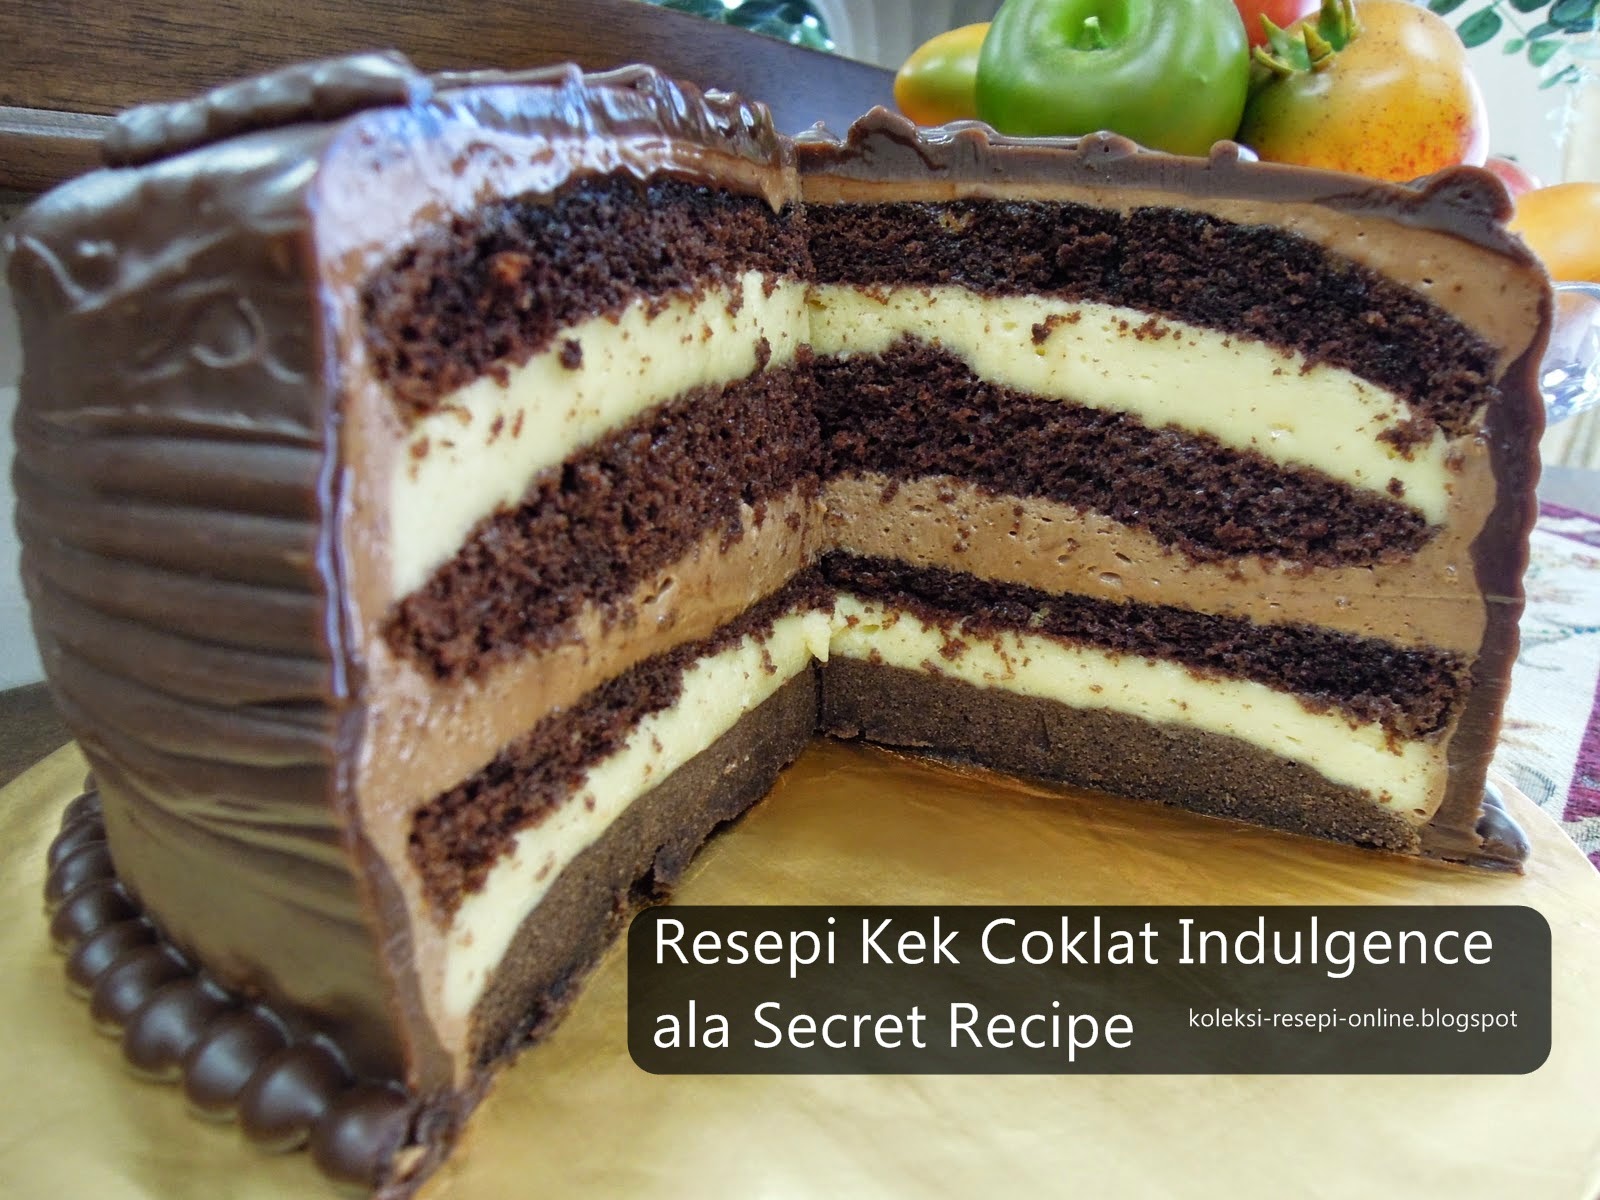 Umi Qaisara: Resepi Kek Coklat Indulgence ala Secret Recipe